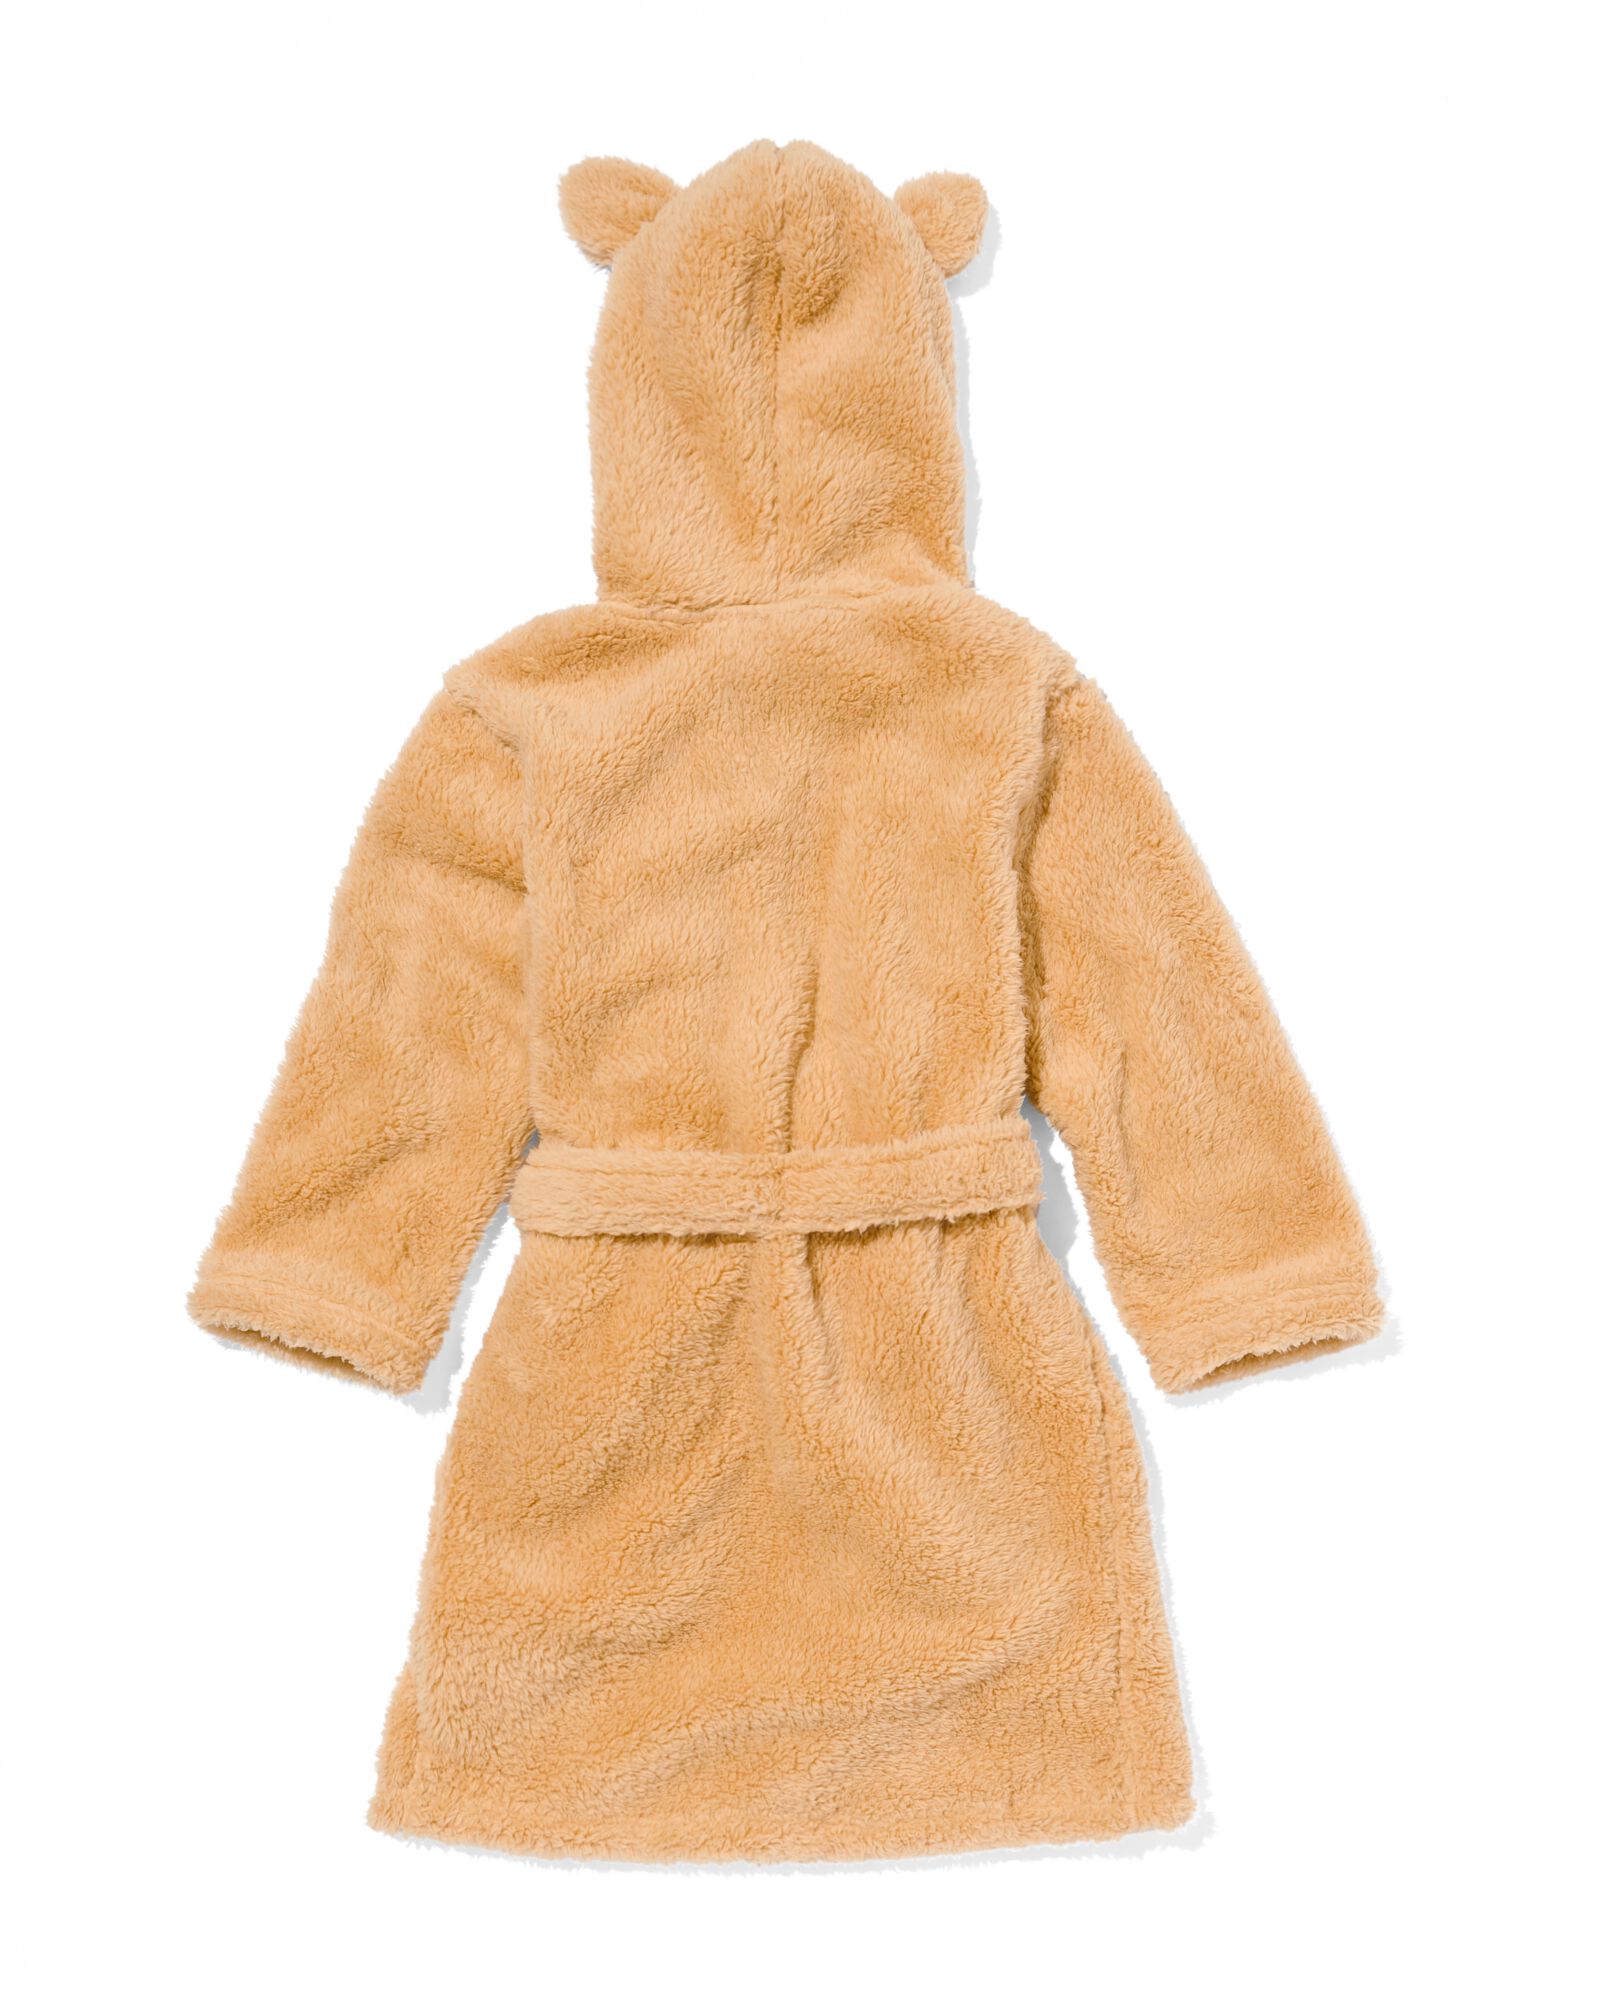 peignoir enfant ours marron marron - 23010580BROWN - HEMA